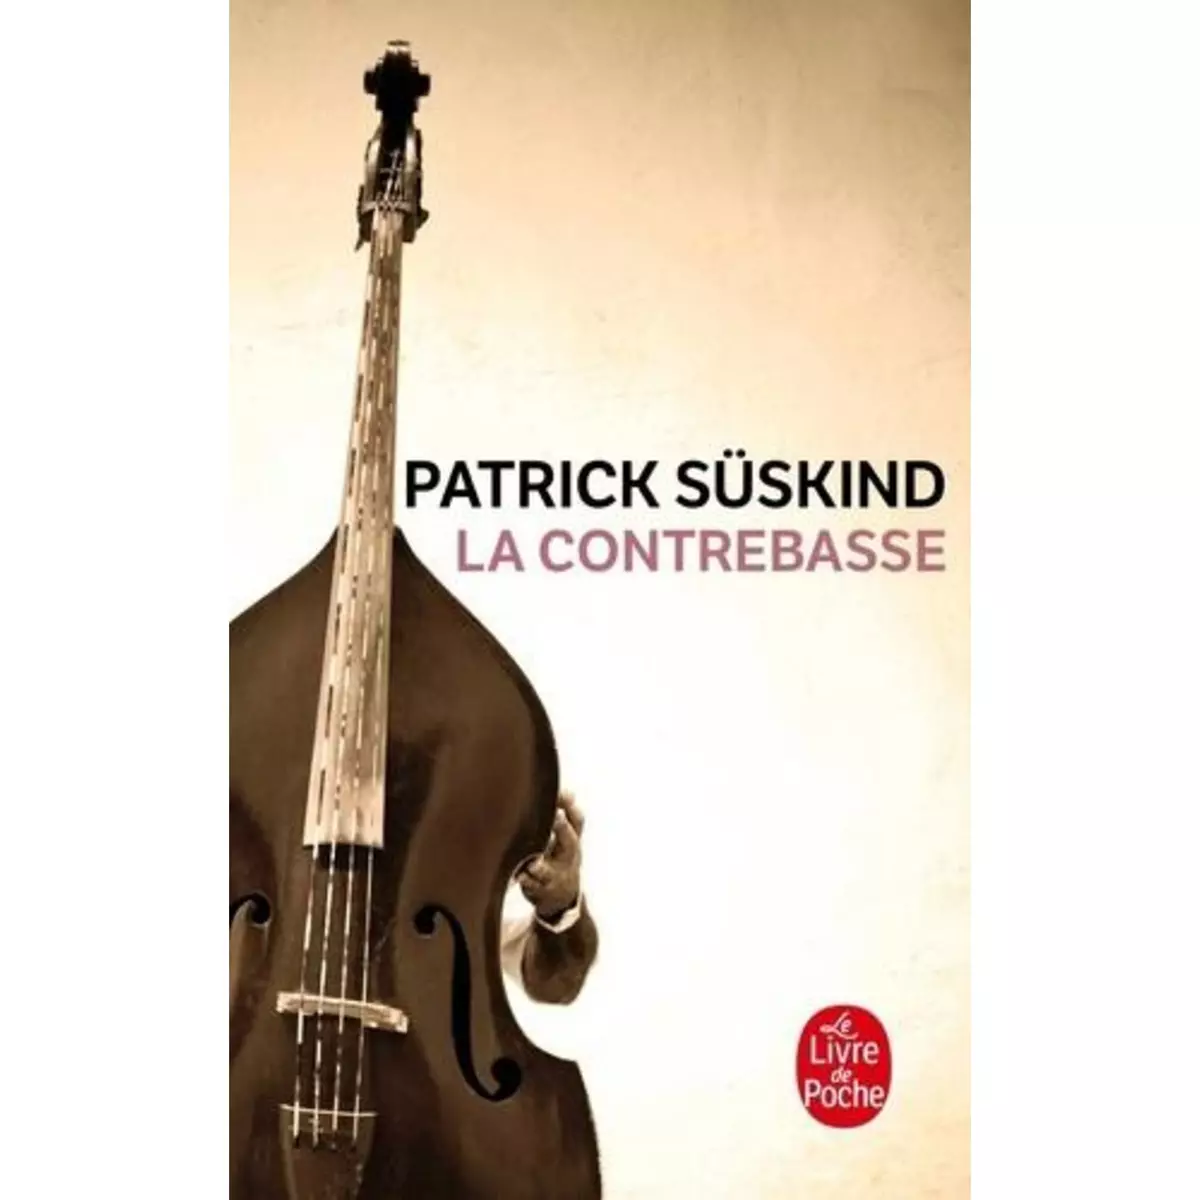  LA CONTREBASSE, Süskind Patrick